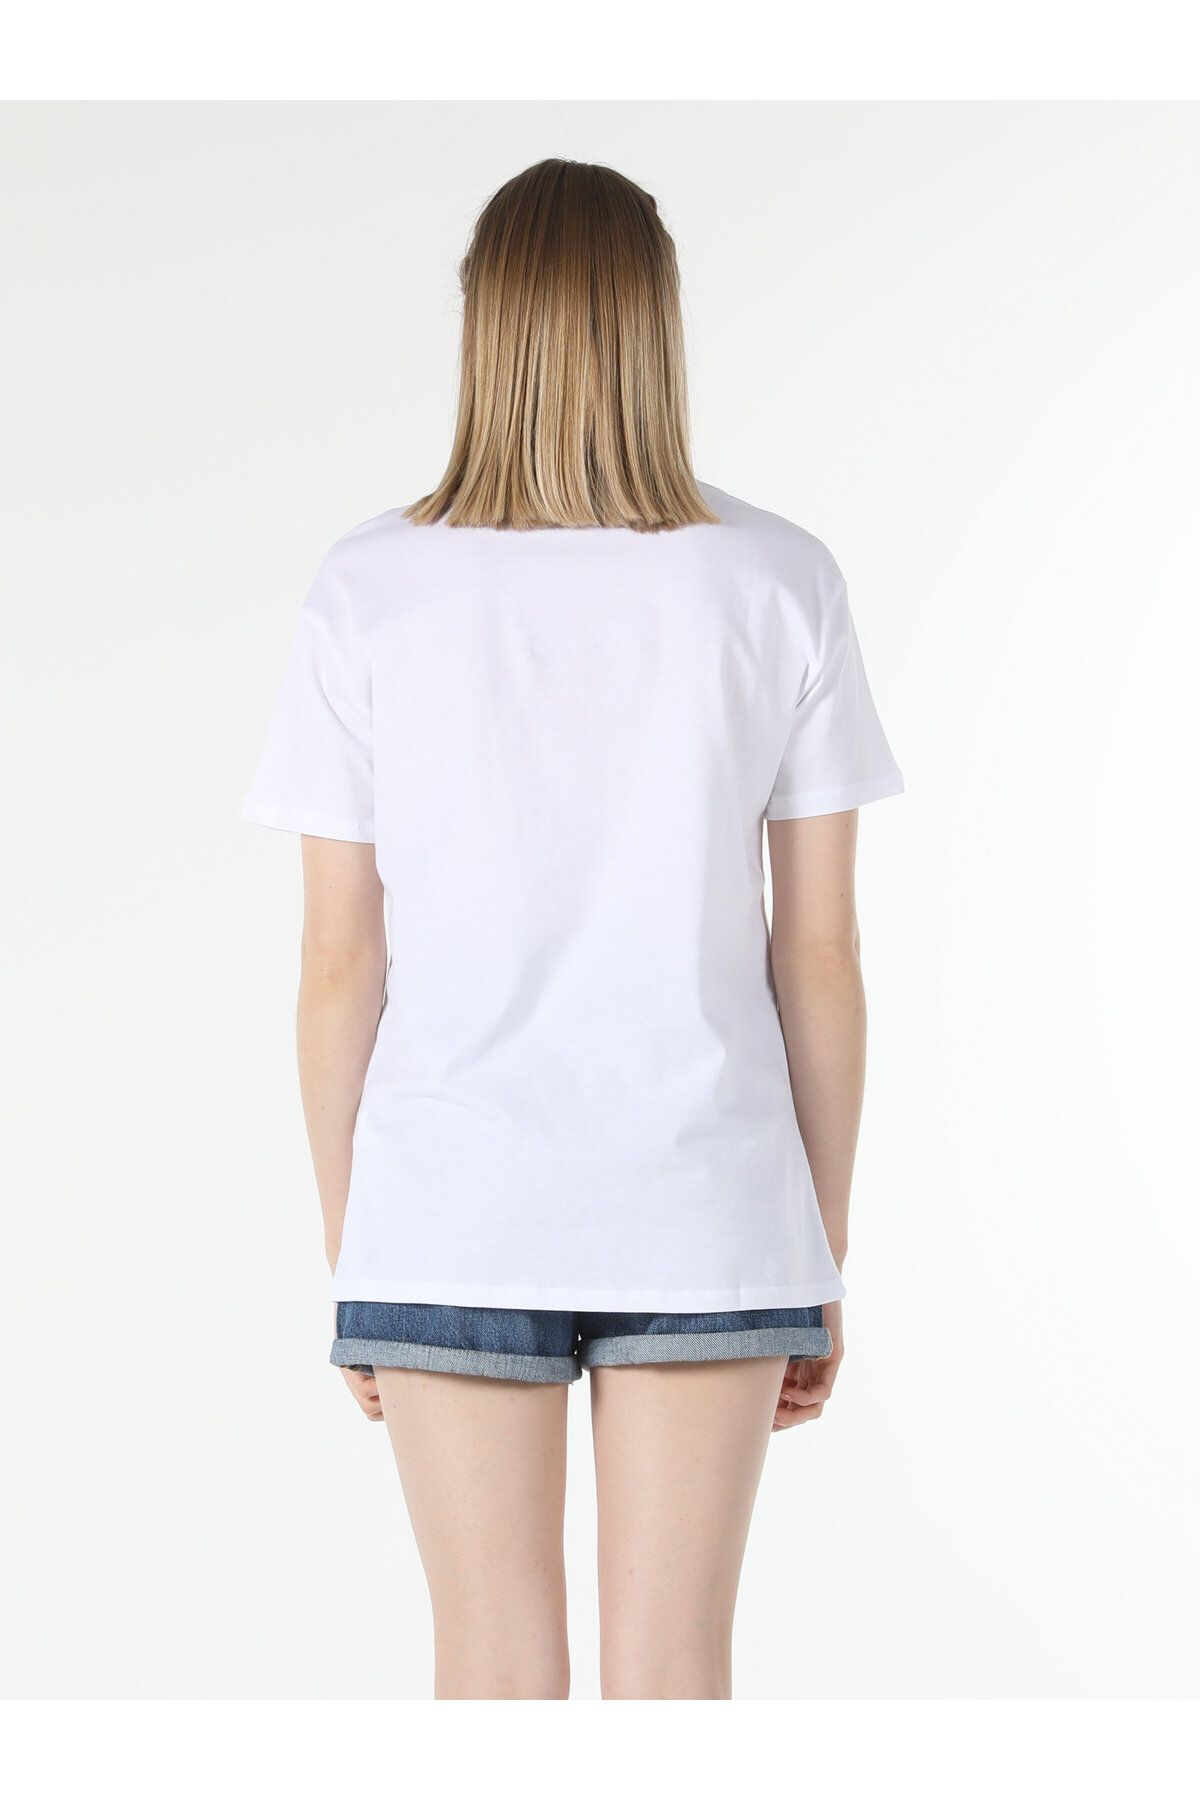 Colin’s تی شرت آستین کوتاه زنانه با یقه Comfort Fit چاپ سفید